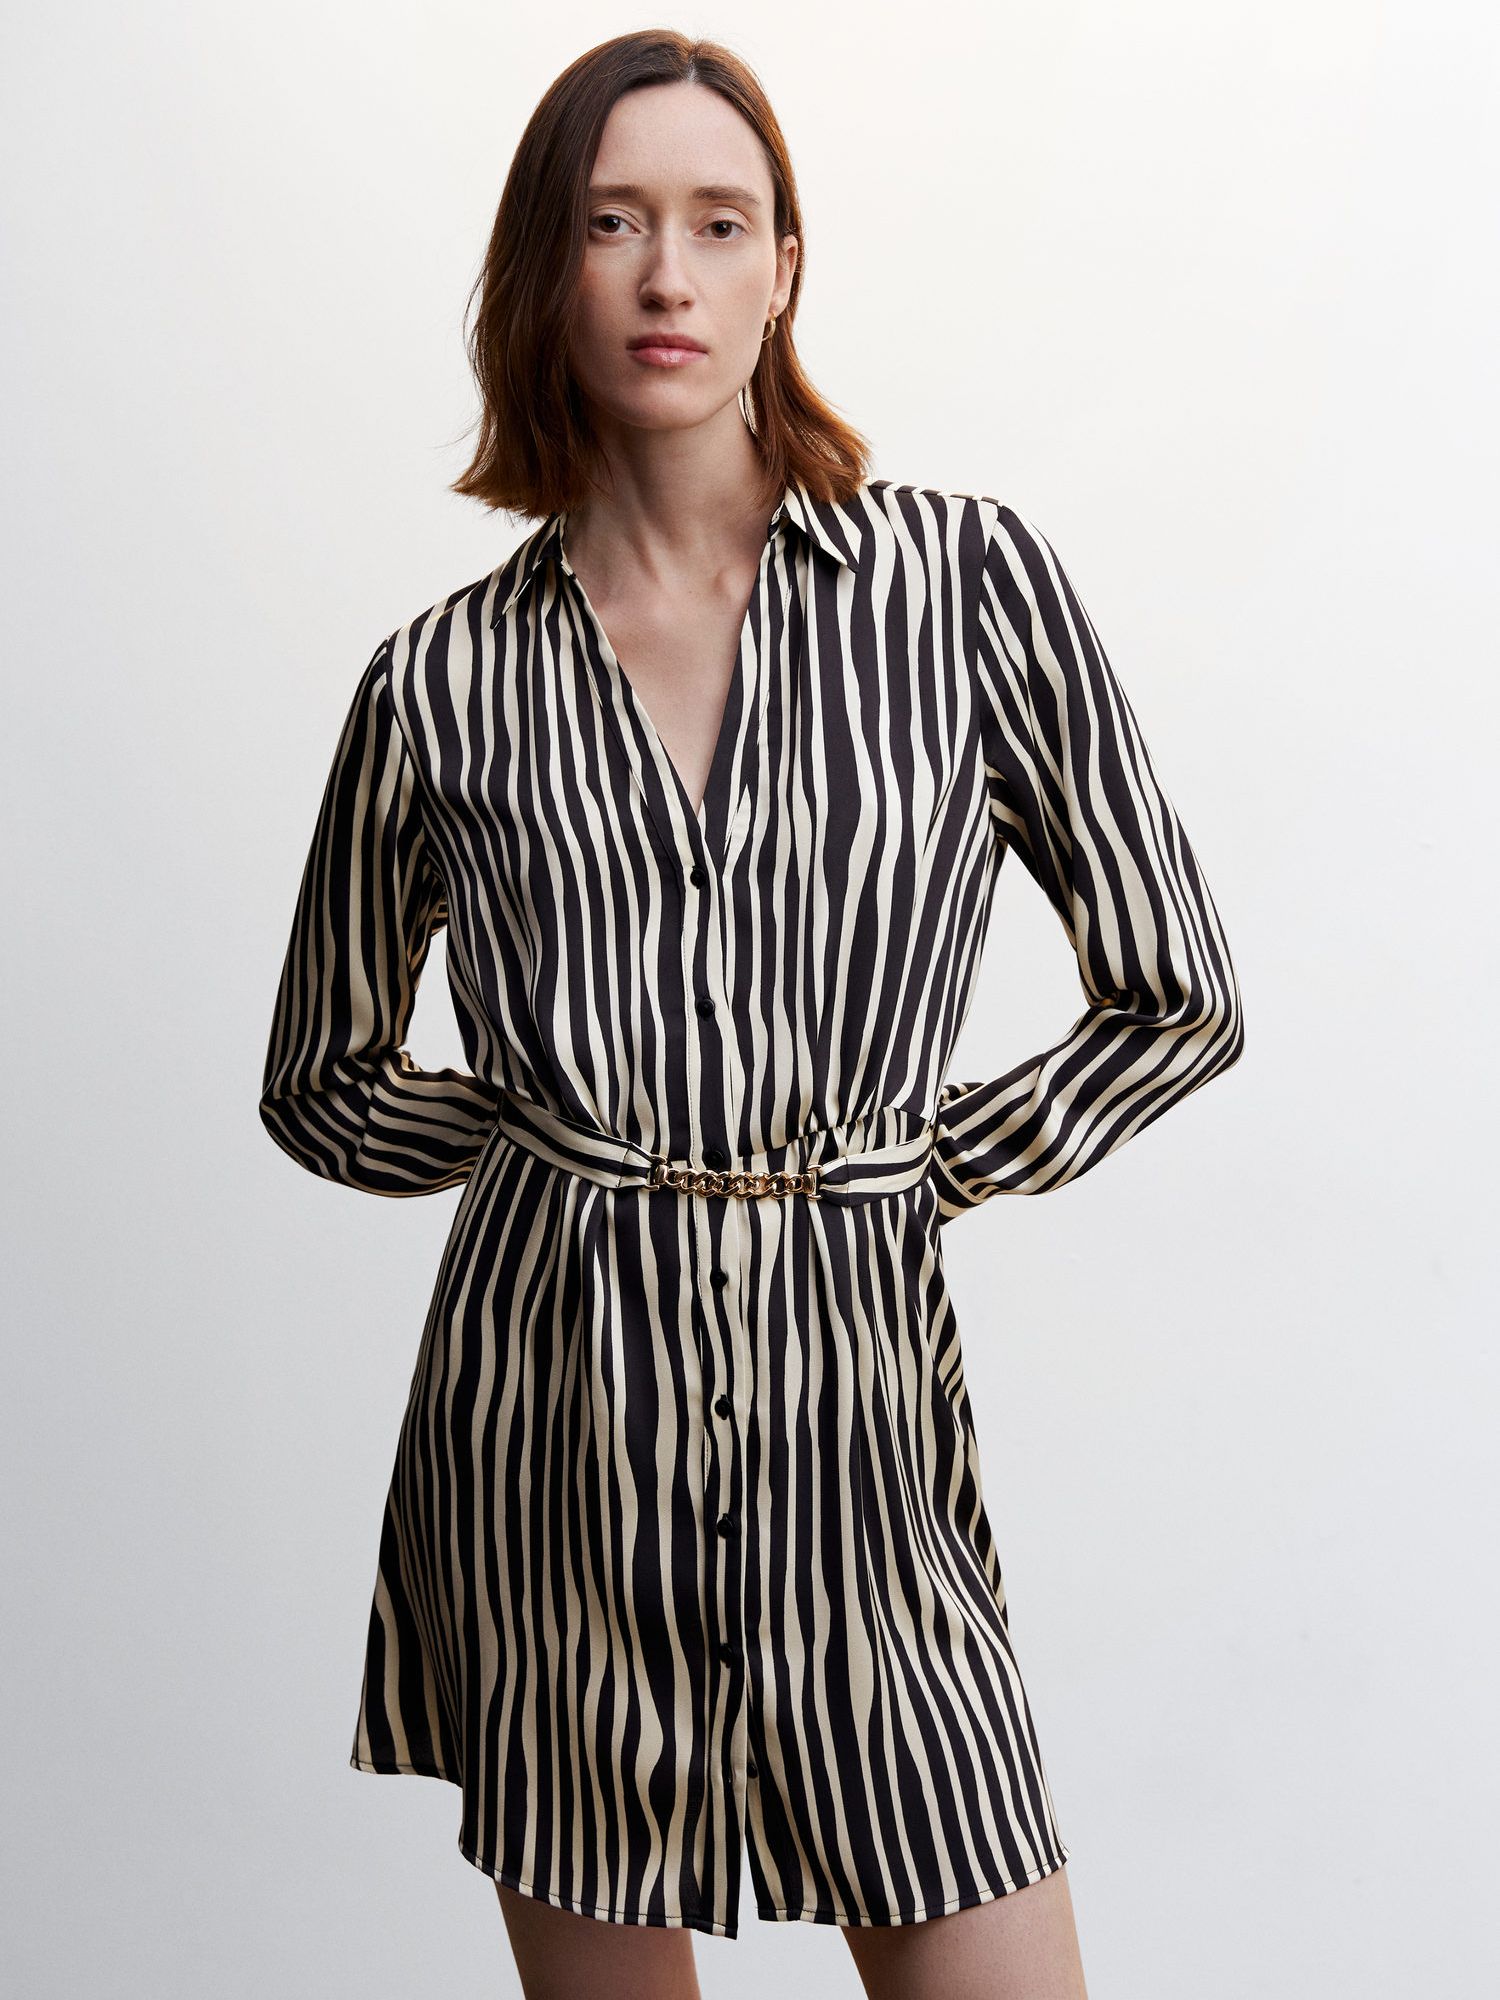 Mango Ninette Animal Stripe Satin Shirt Dress, Black/White, 14